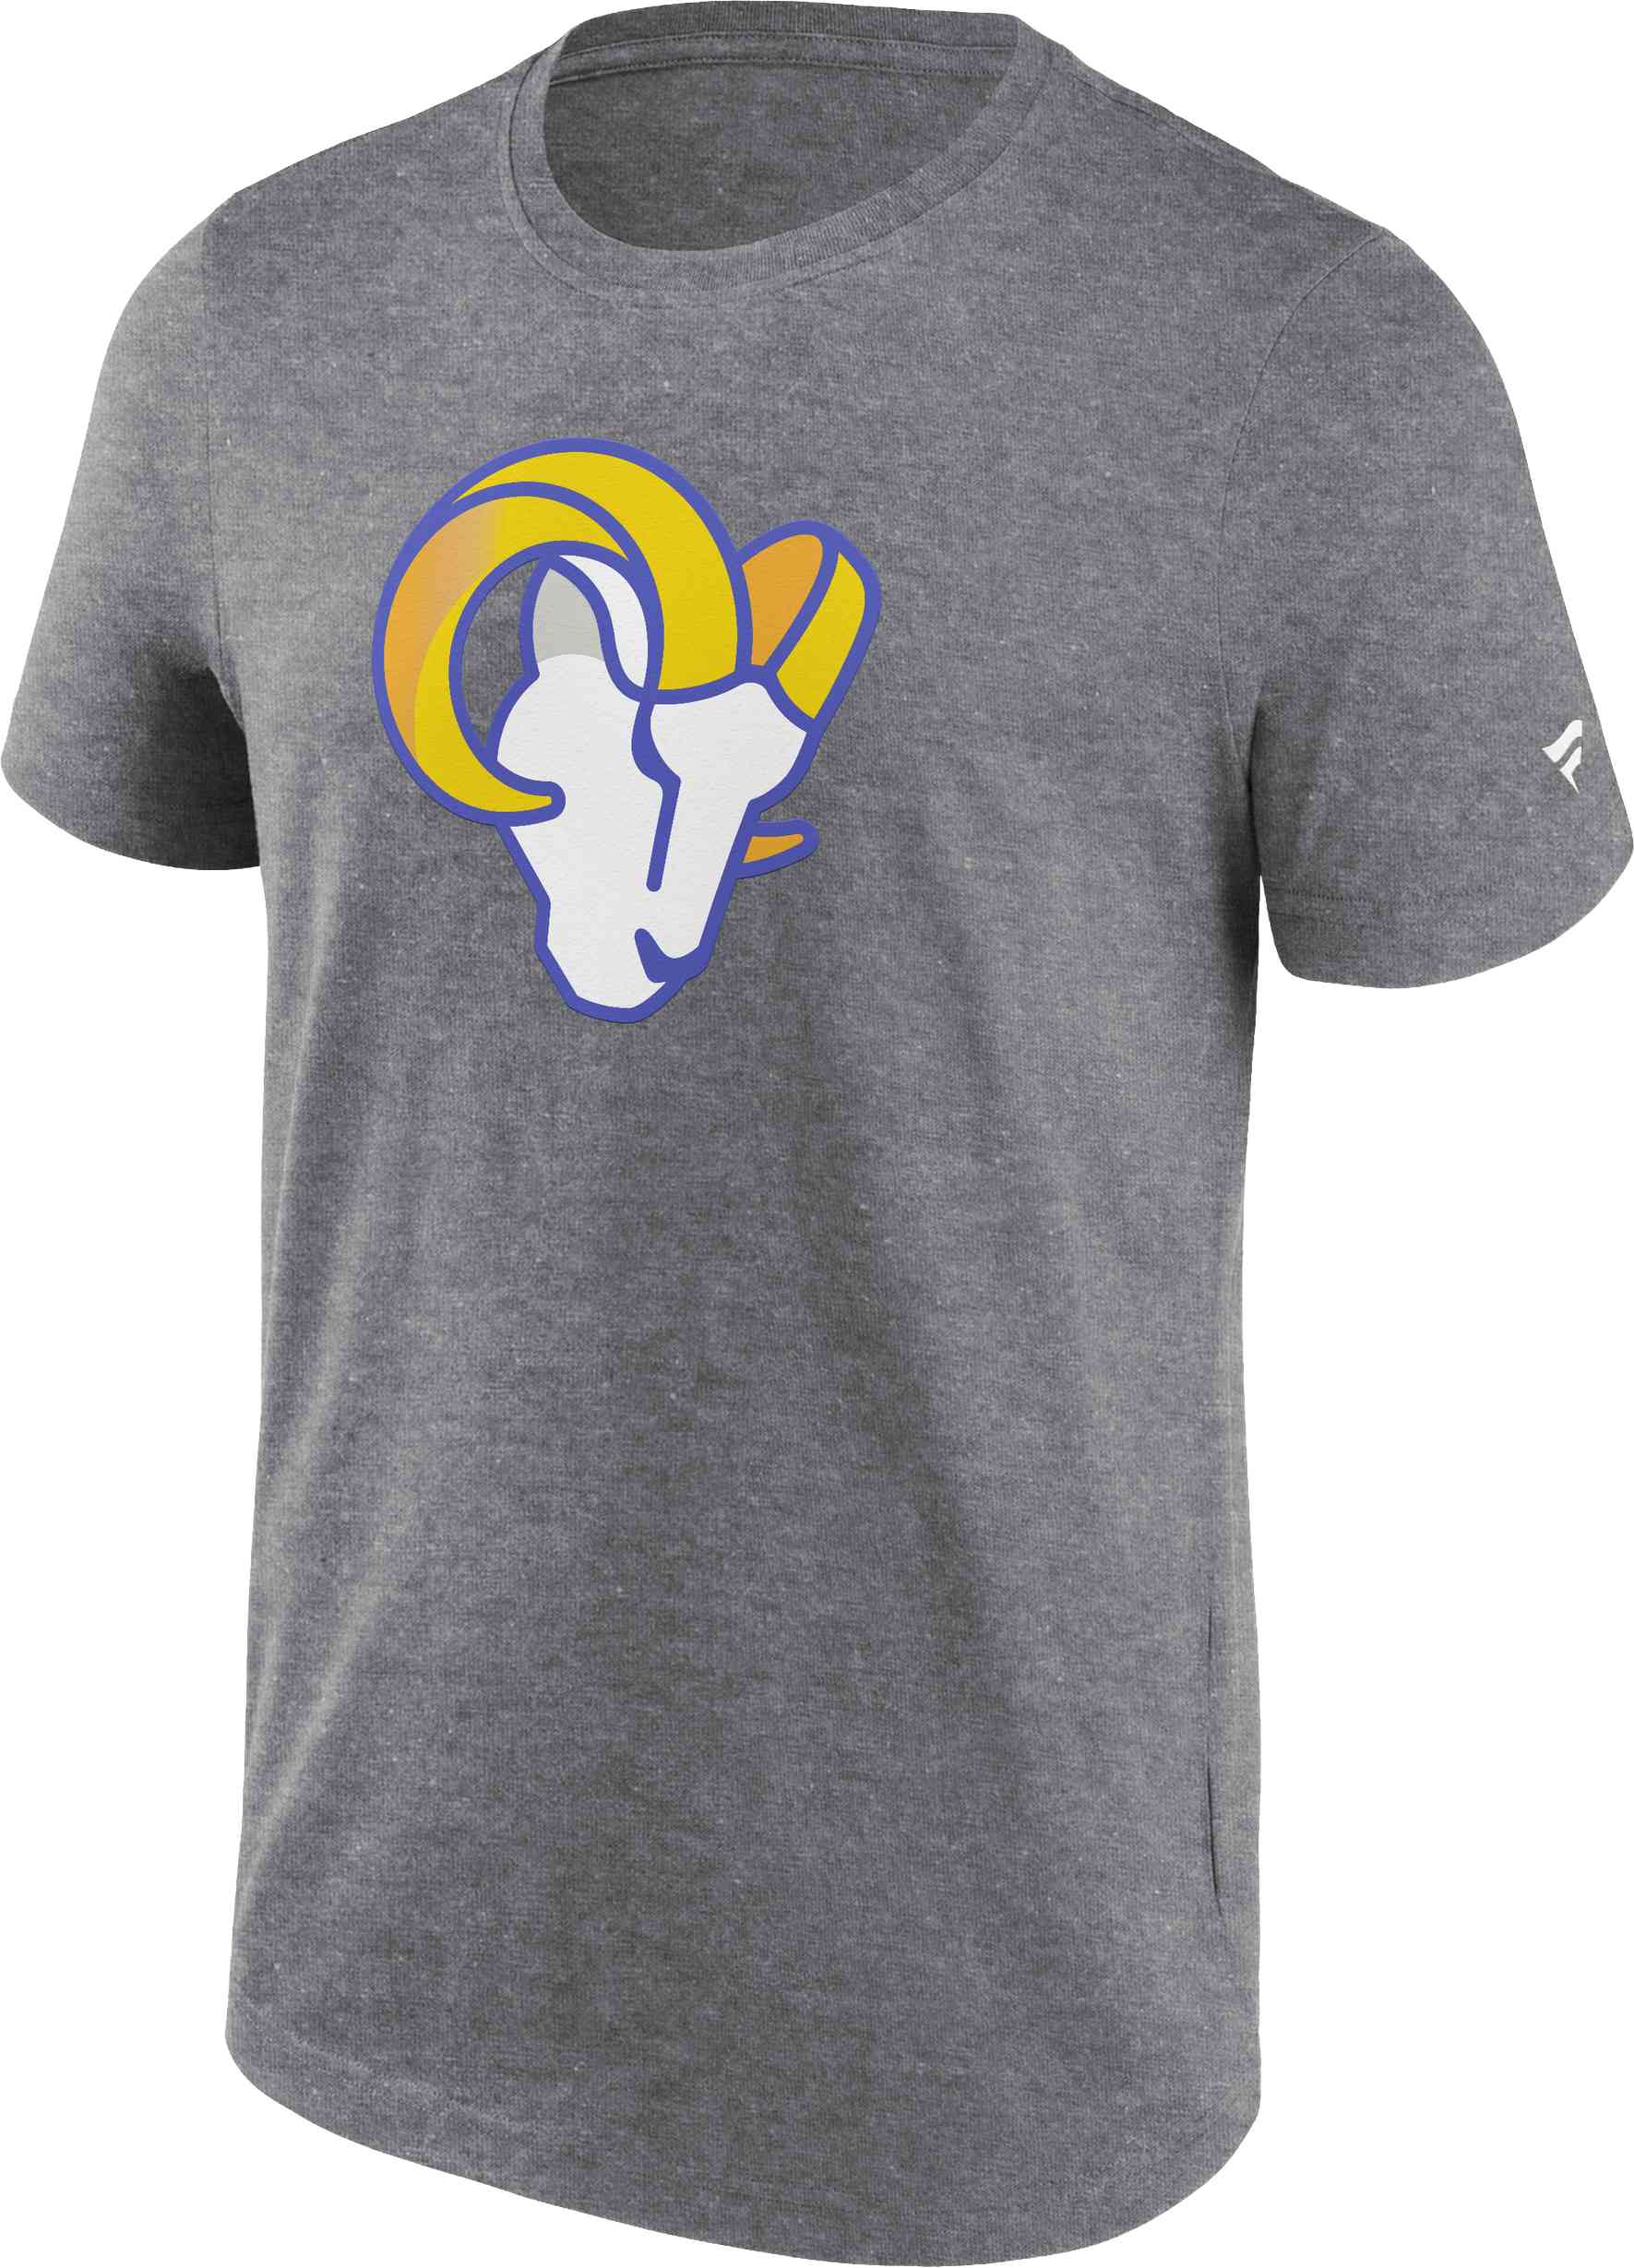 Fanatics - NFL Los Angeles Rams Primary Logo Graphic T-Shirt